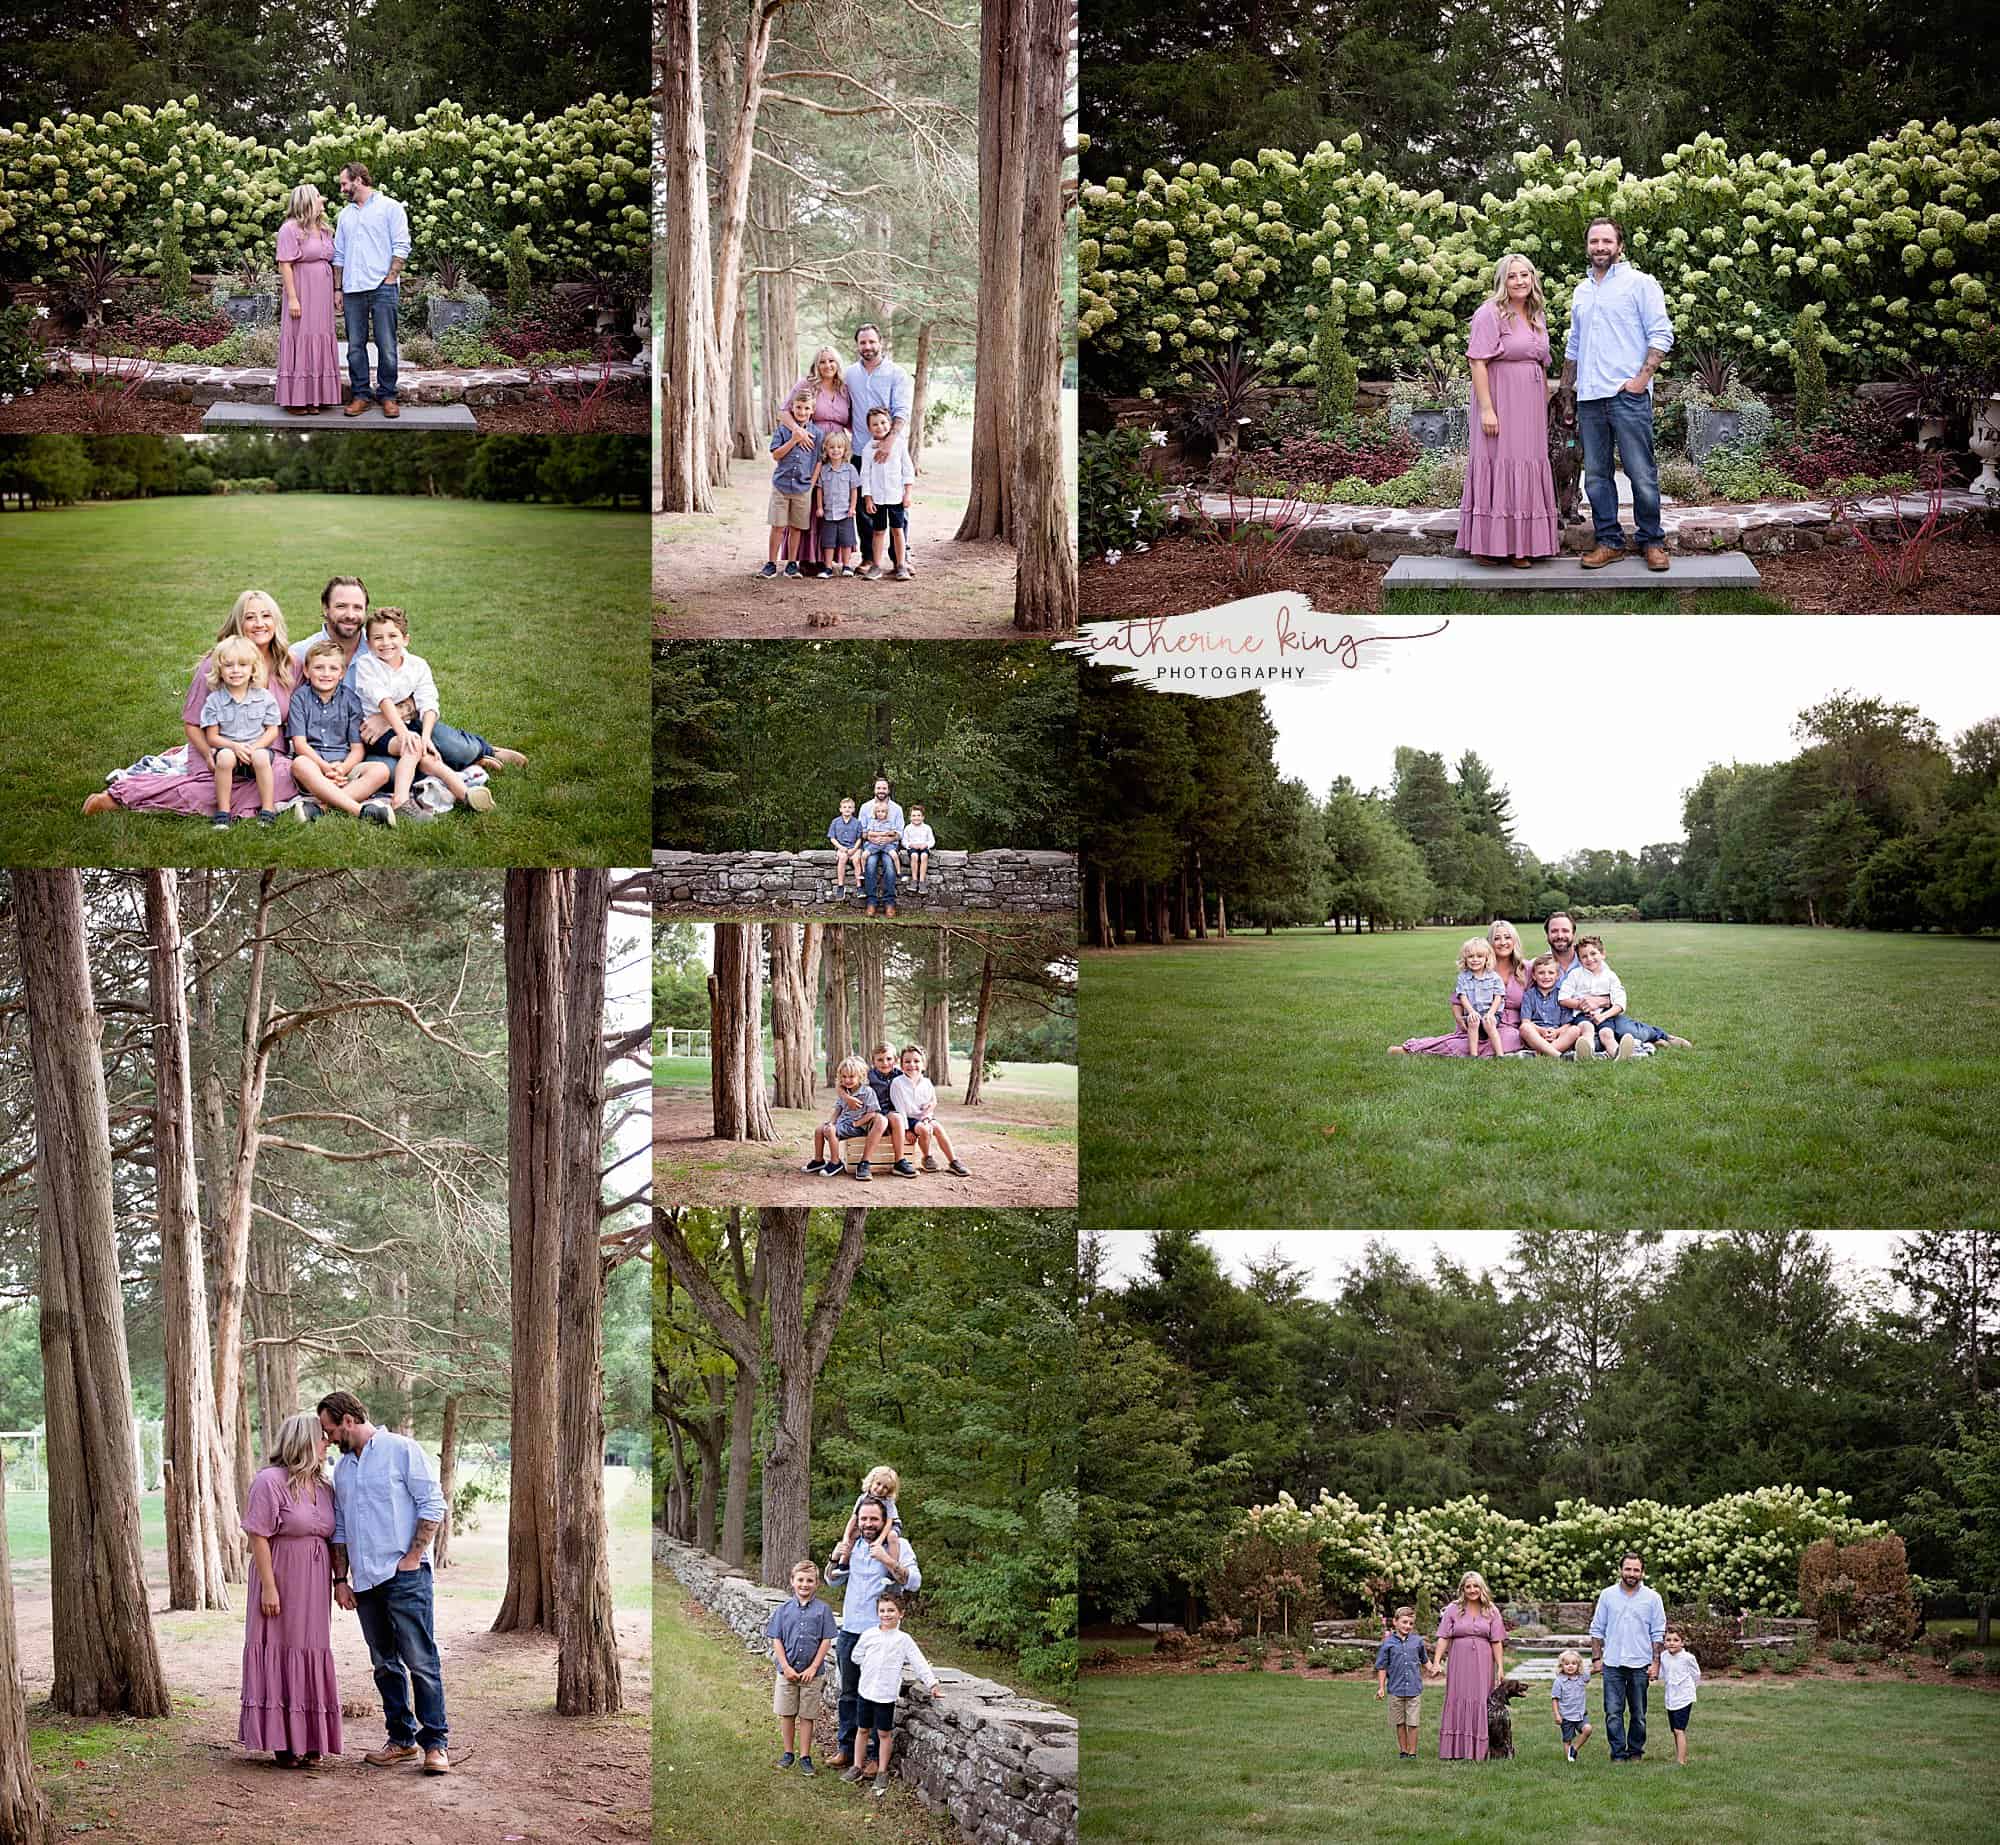 10th wedding anniversary photoshoot family photoshoot